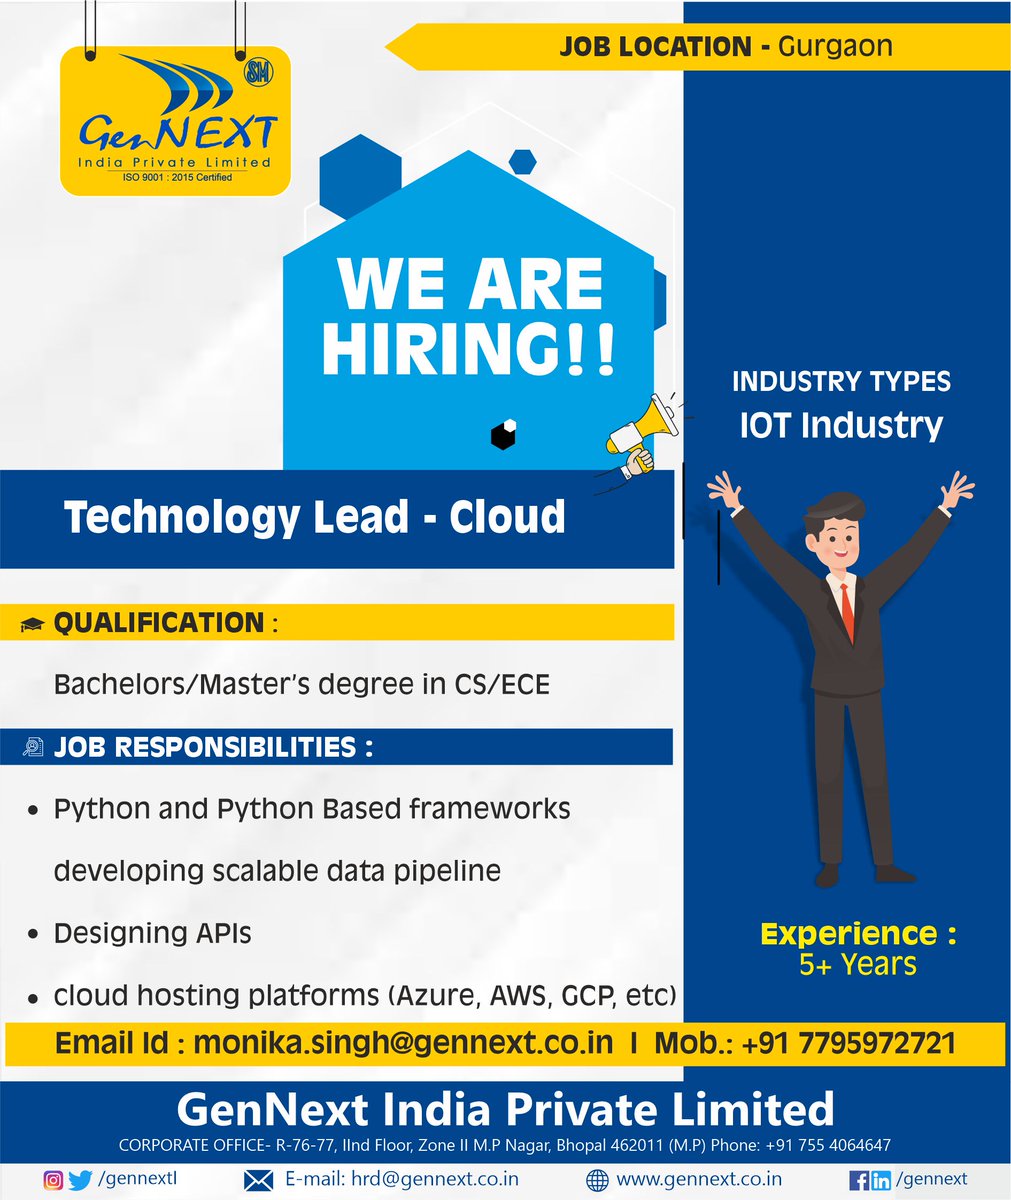 #urgent_hirings
Job Title: Technology Lead - Cloud

#technologylead #cloud #gurgaon #ece #iot #aws #gcp #experience #hiringalert #hiringnow #employment #job #work #jobalerts #vacancyjob #gennext #gennexthiring #gennextjob #gennextindia